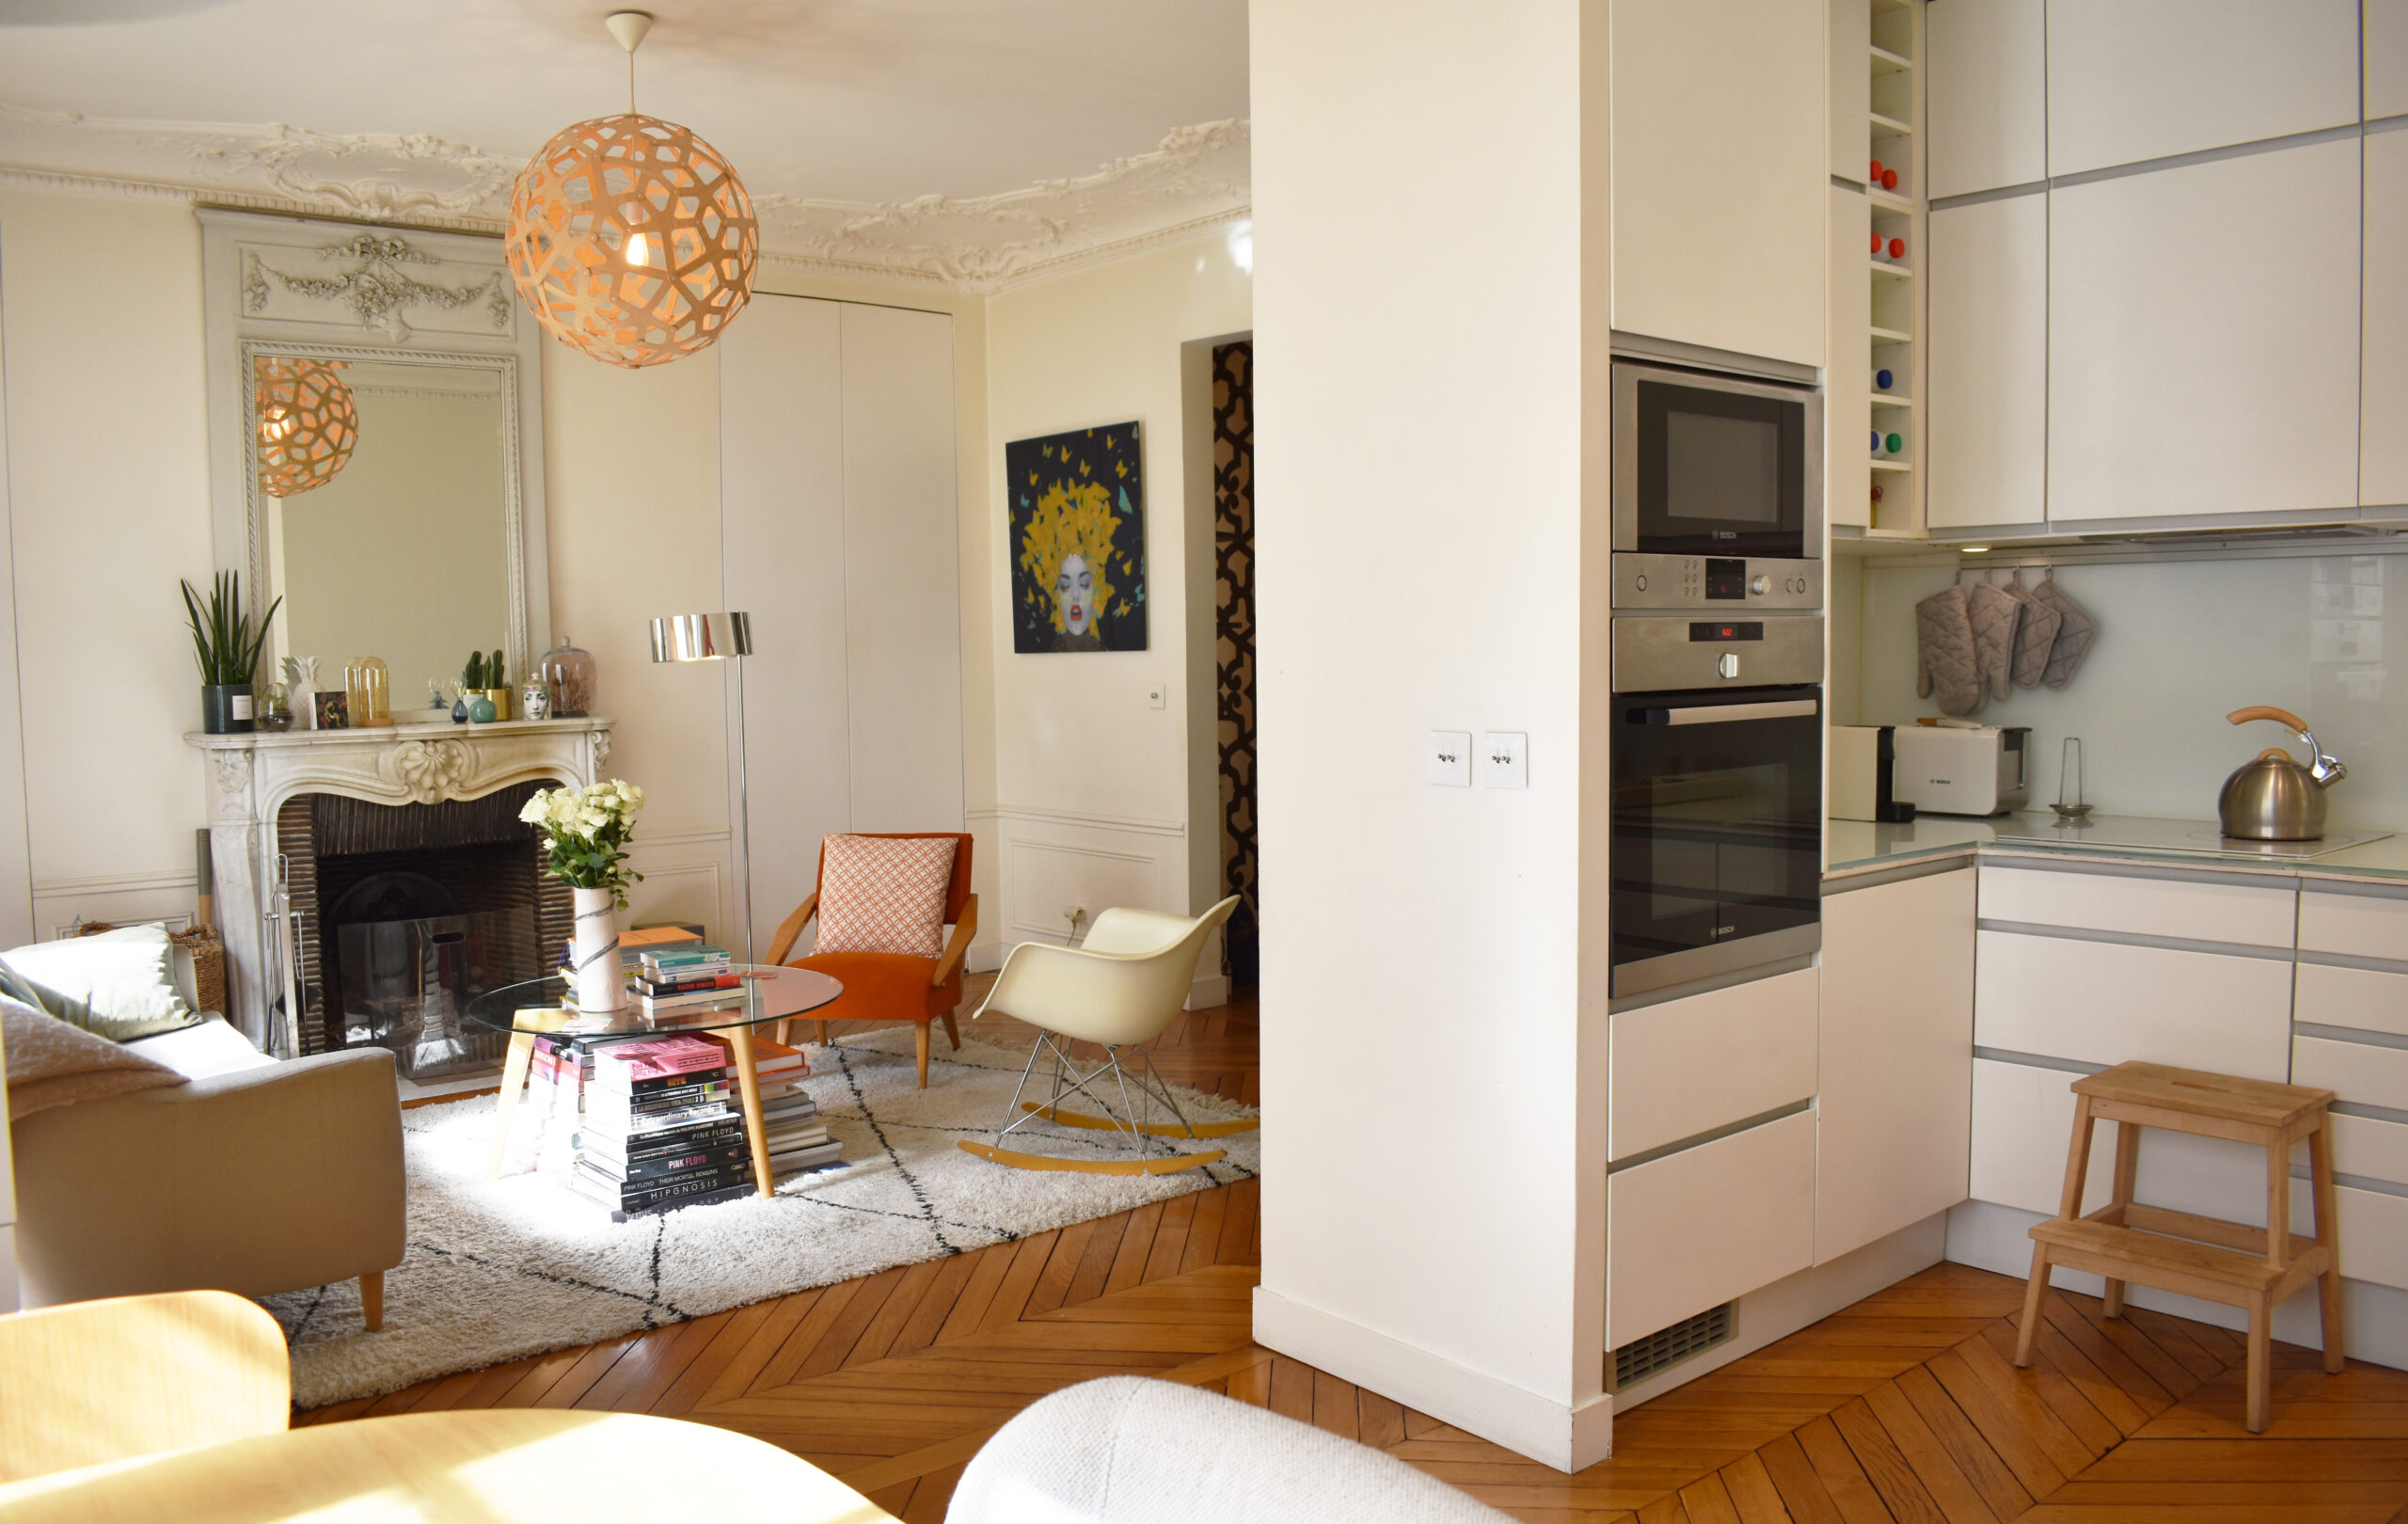 kitchen:living area